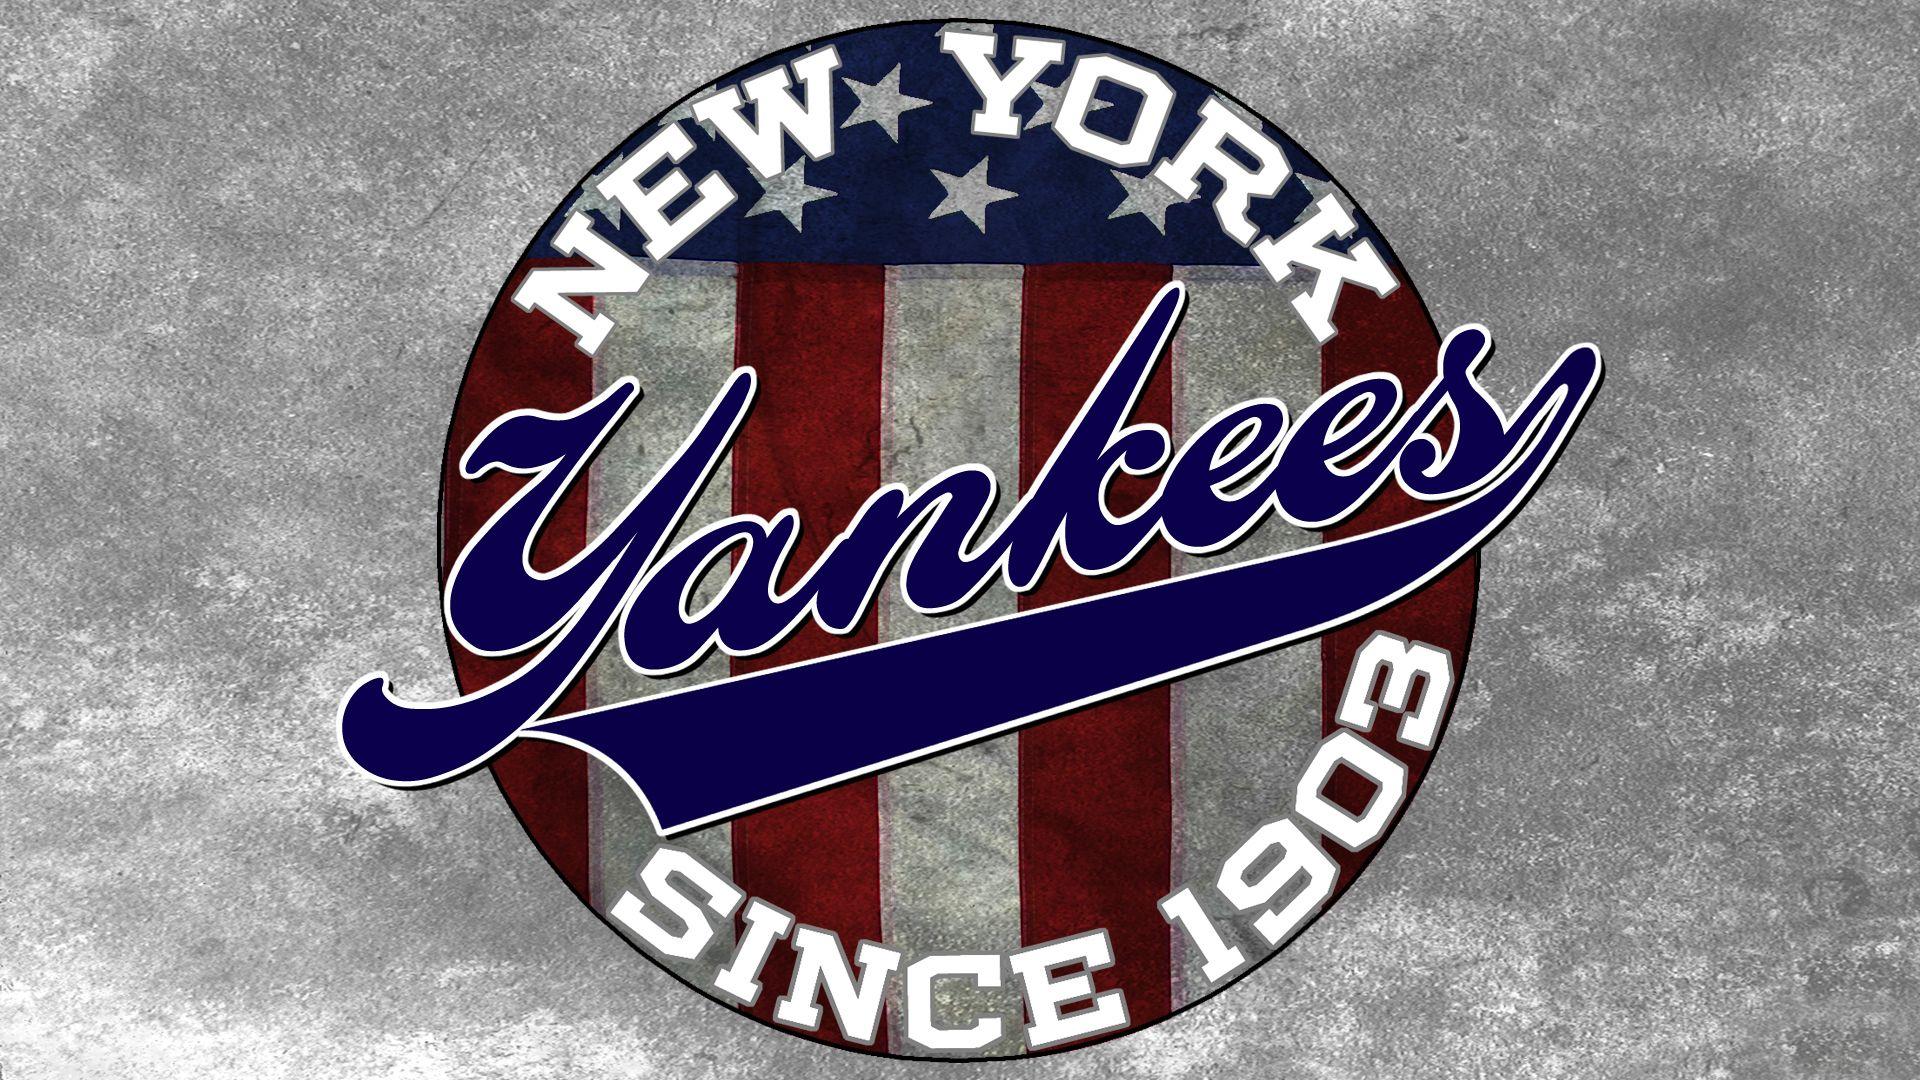 New York Yankees Baseball Team HD Wallpapers & Logo Images…